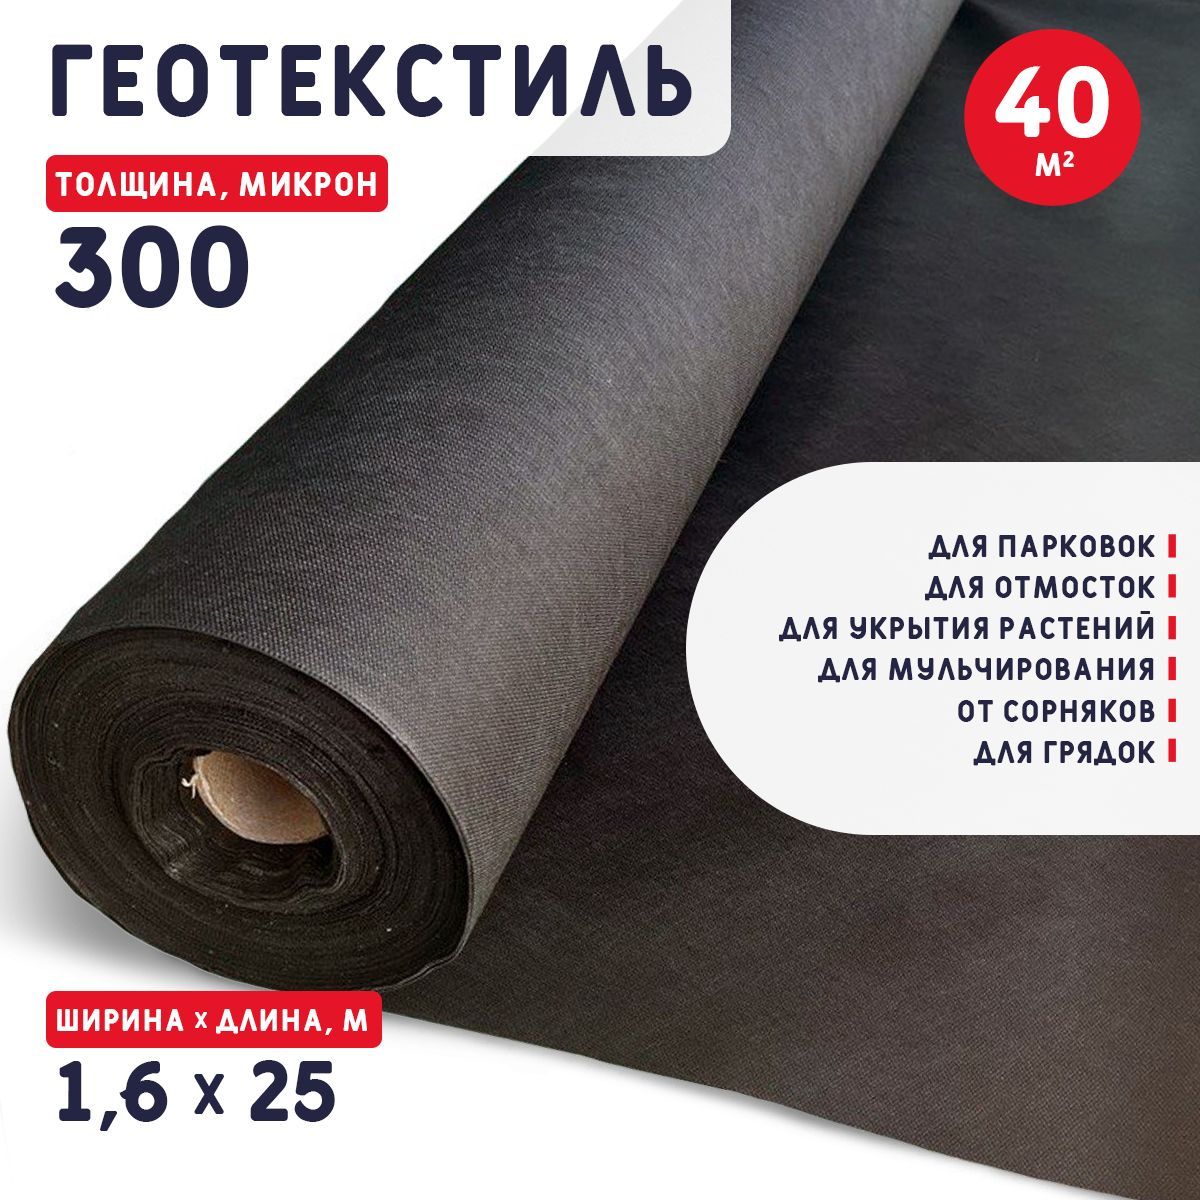 Геотекстиль300микрон(40м2)100г/м2